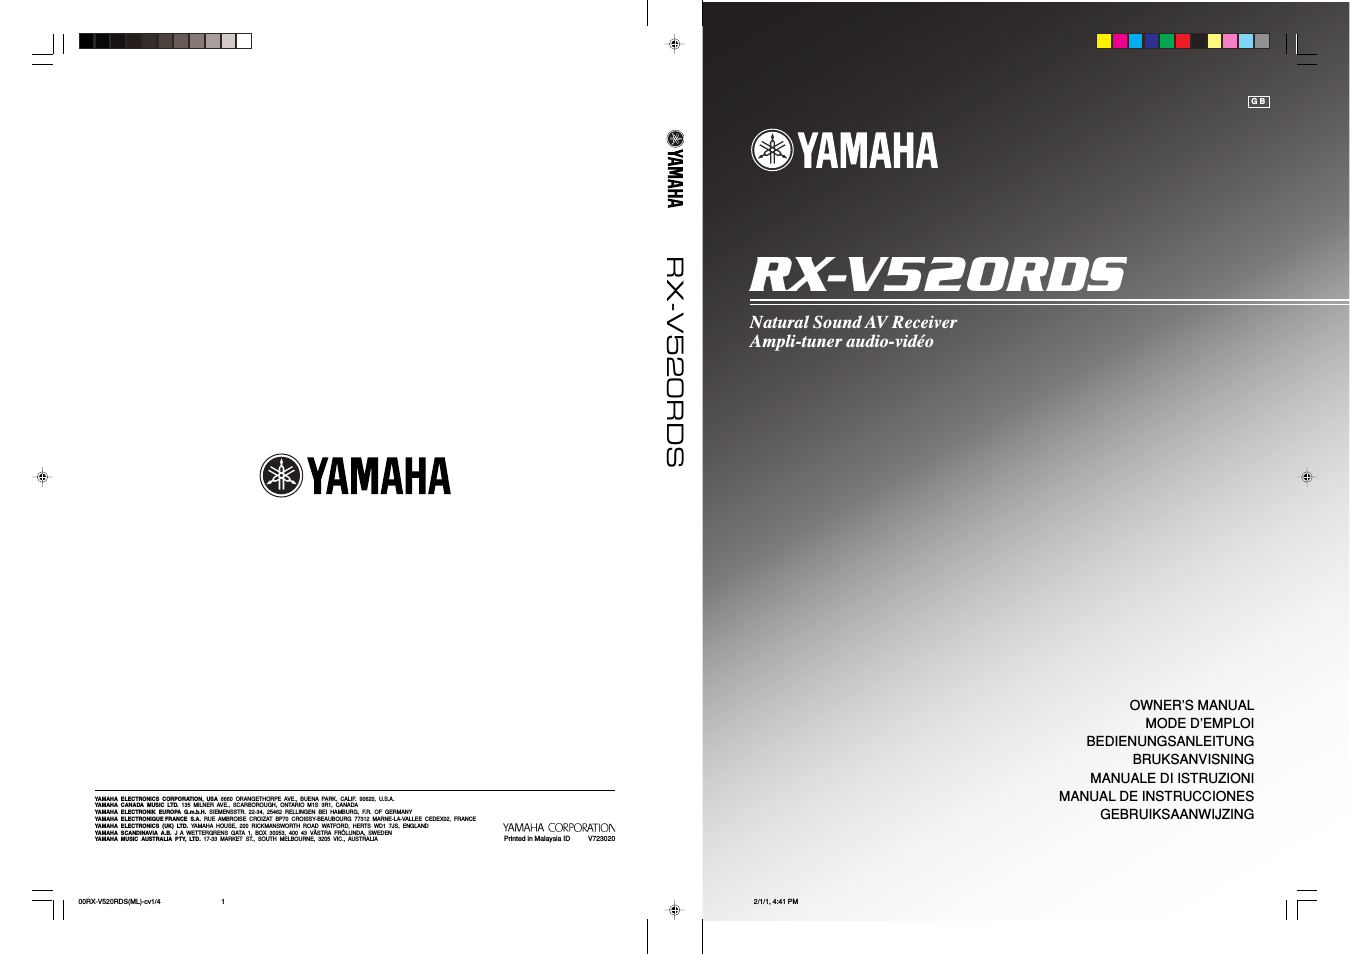 RX-V520RDS